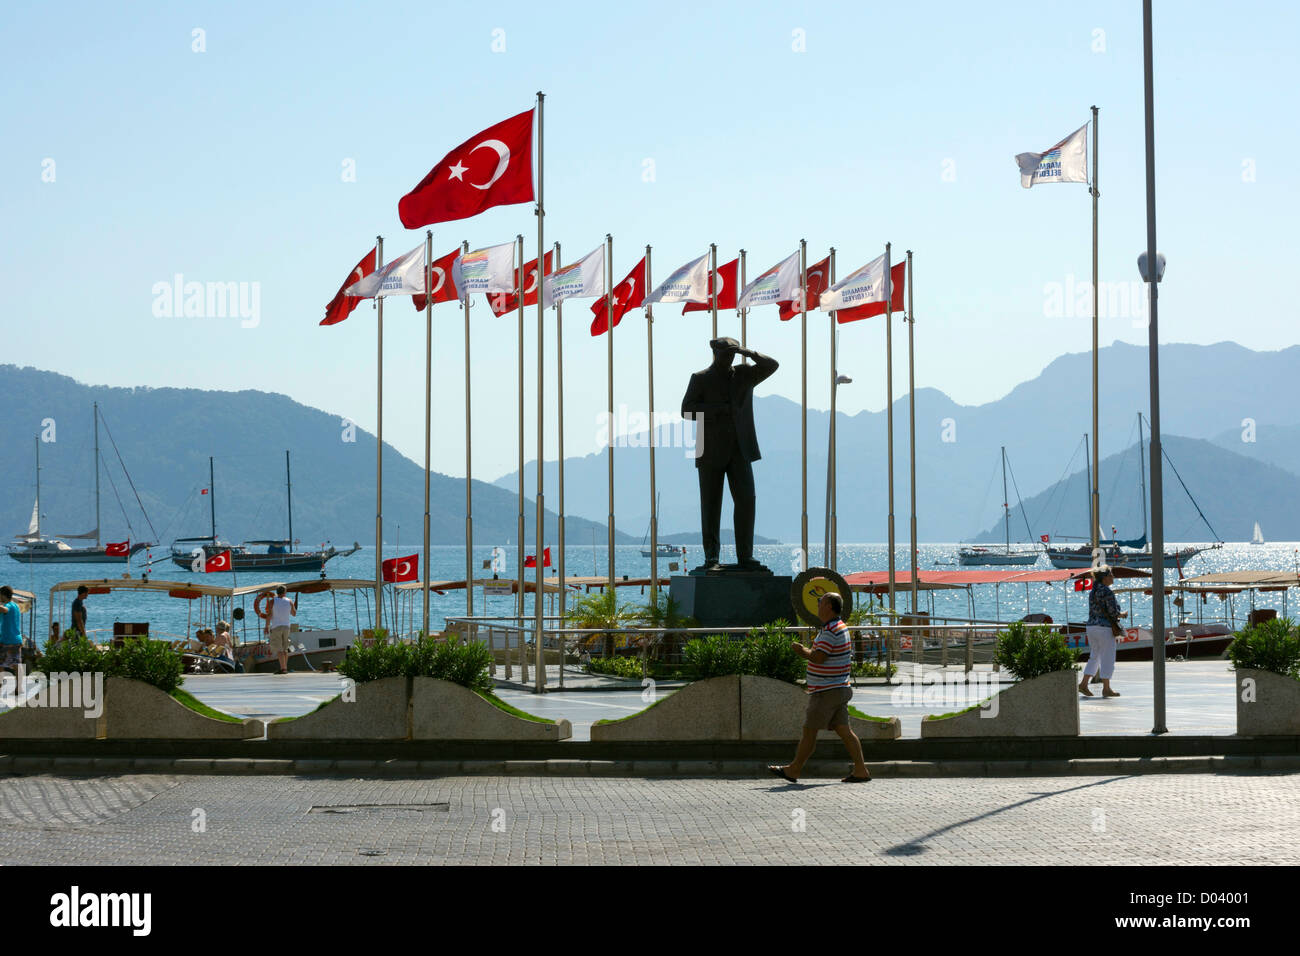 Statue of Ataturk with Turkish flags, Marmaris, Turkey Stock Photo